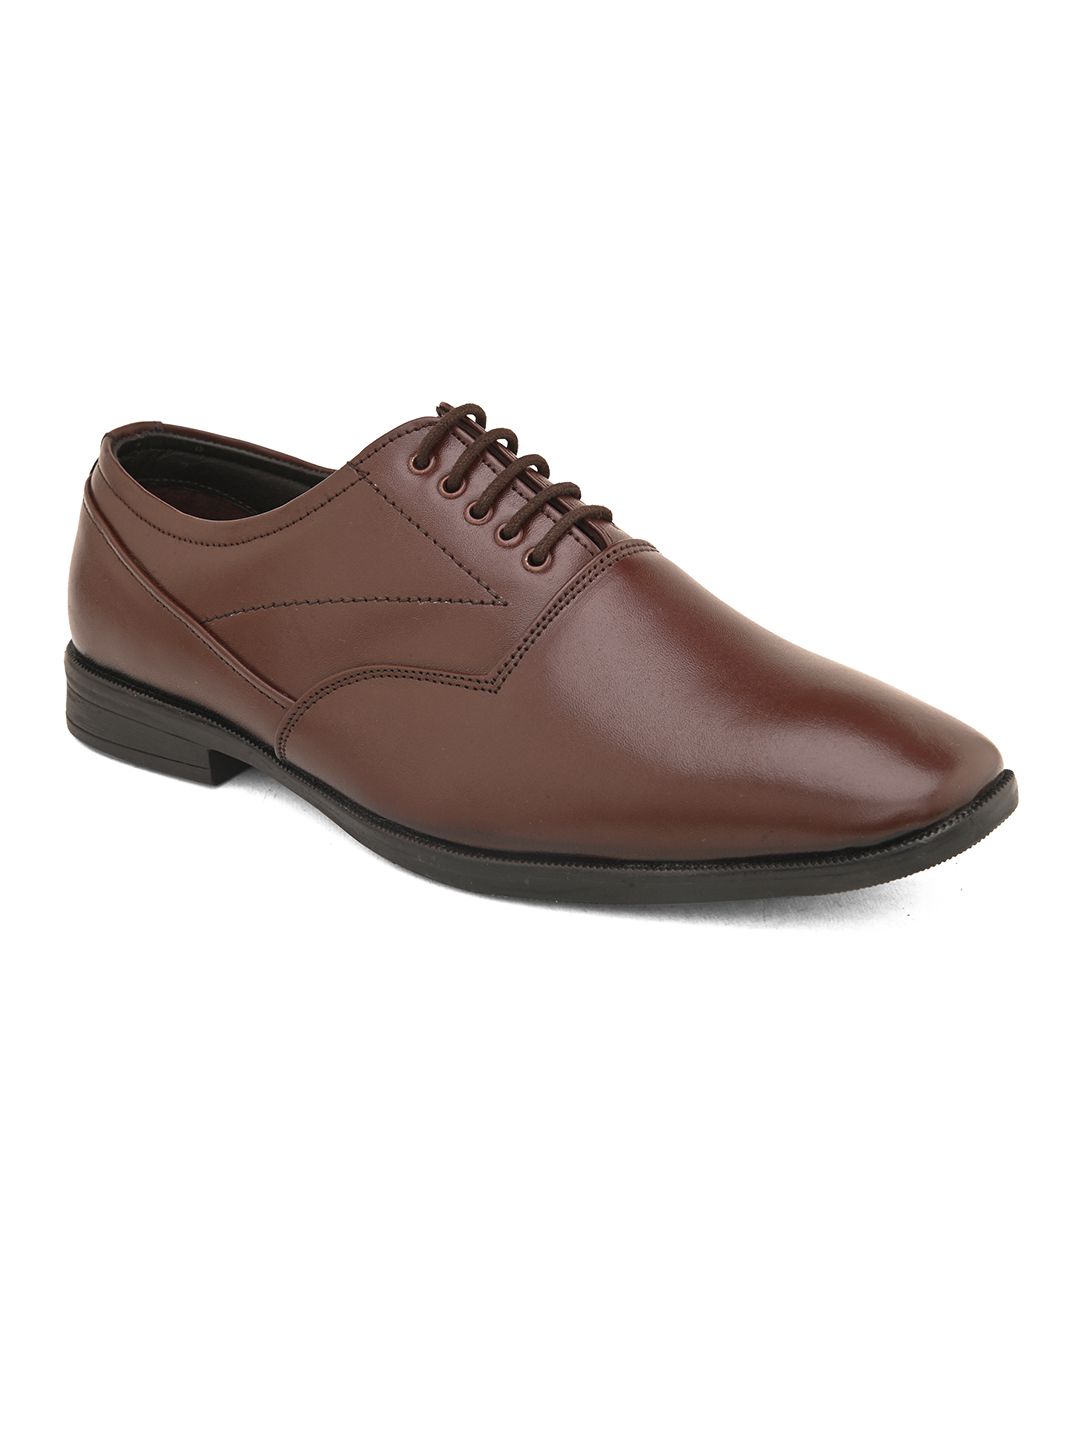     			Fentacia - Brown Men's Oxford Formal Shoes